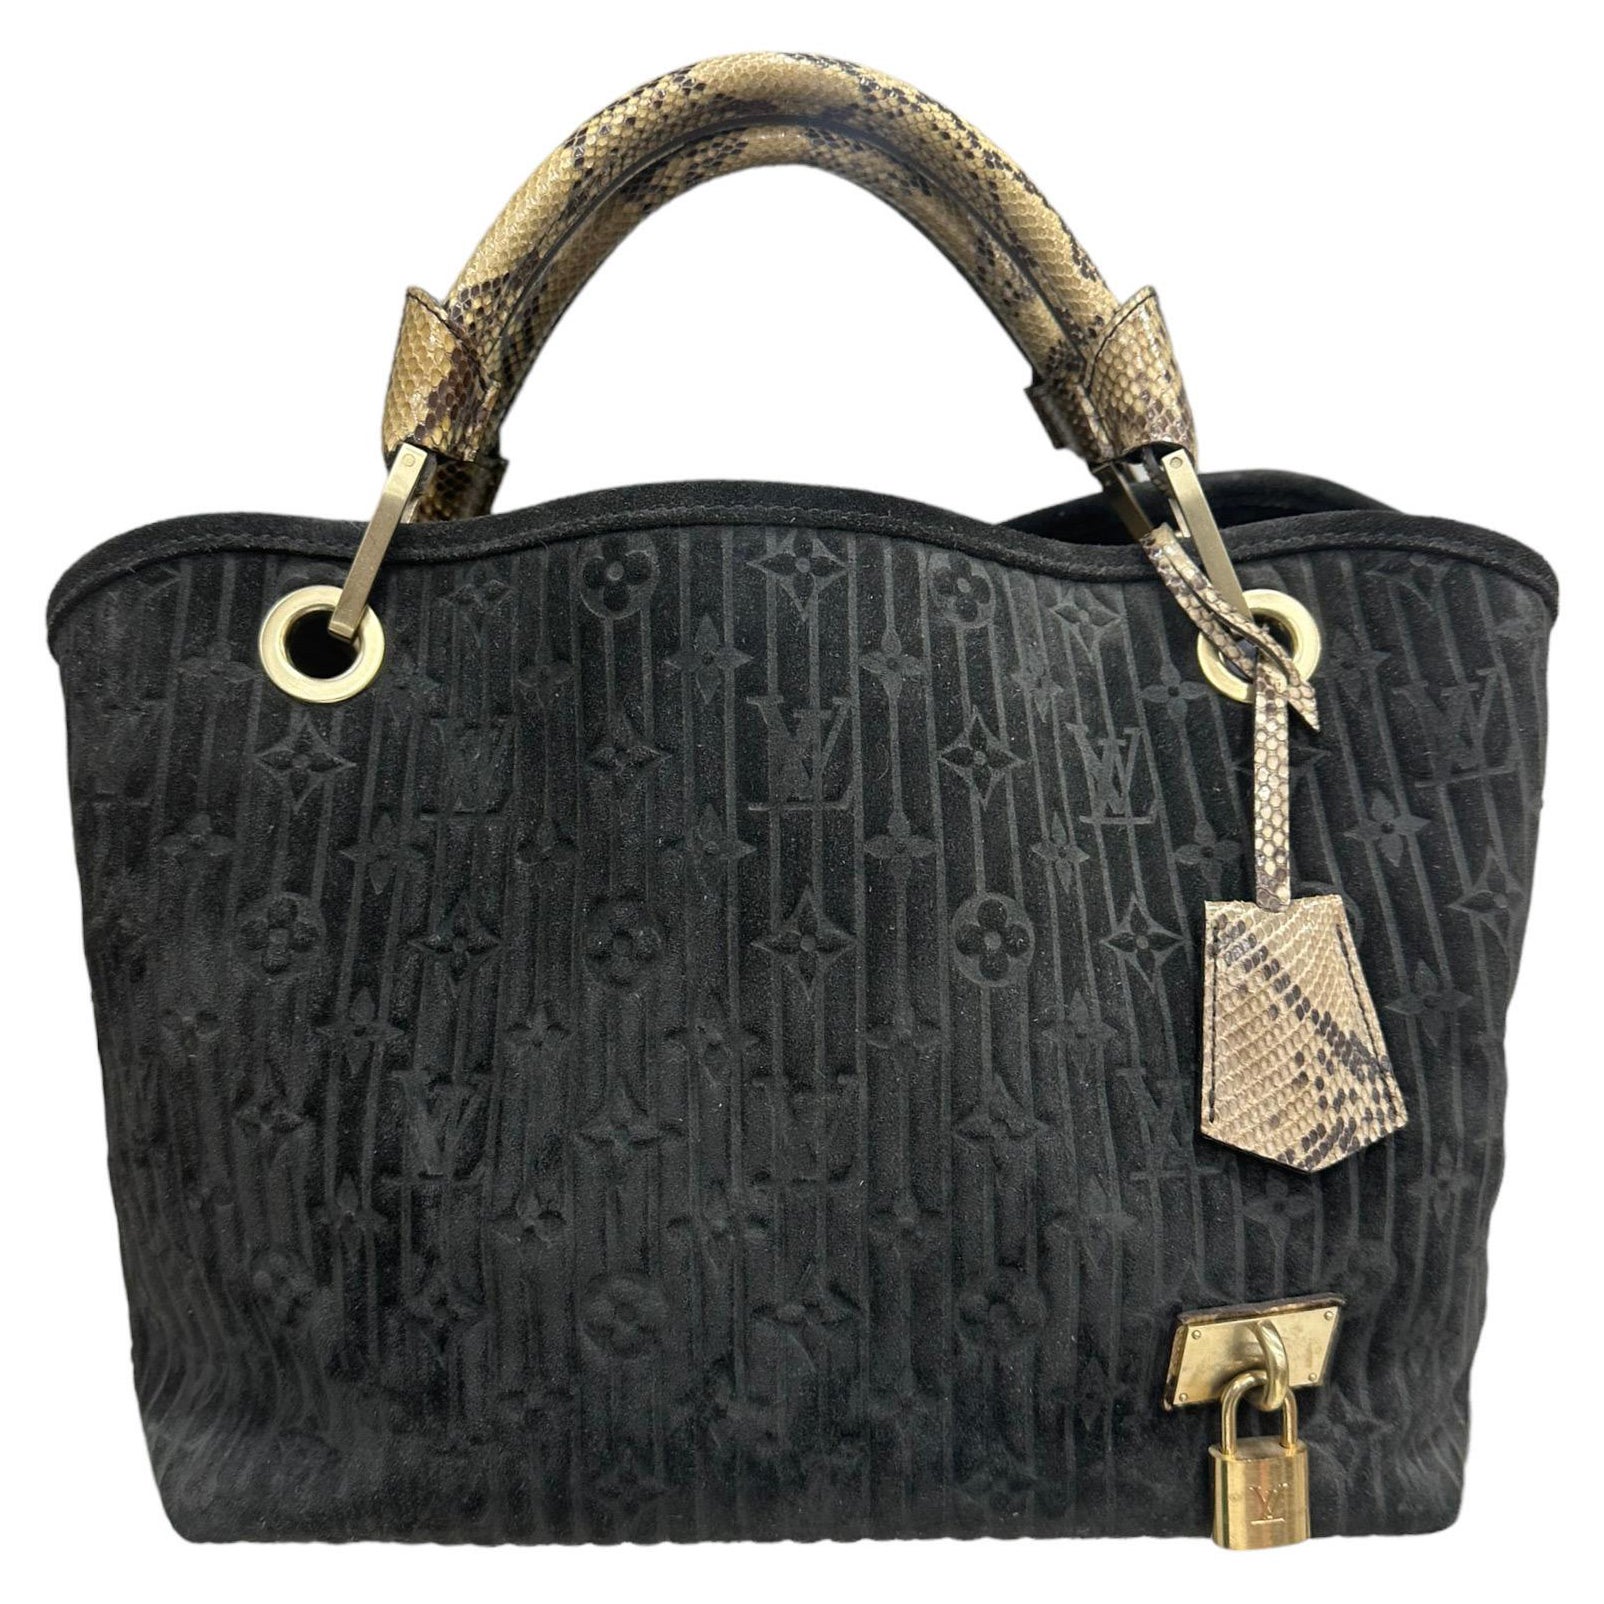 2008 Lousi Vuitton Whisper Black Suede Top Handle Bag Limited Edition For Sale